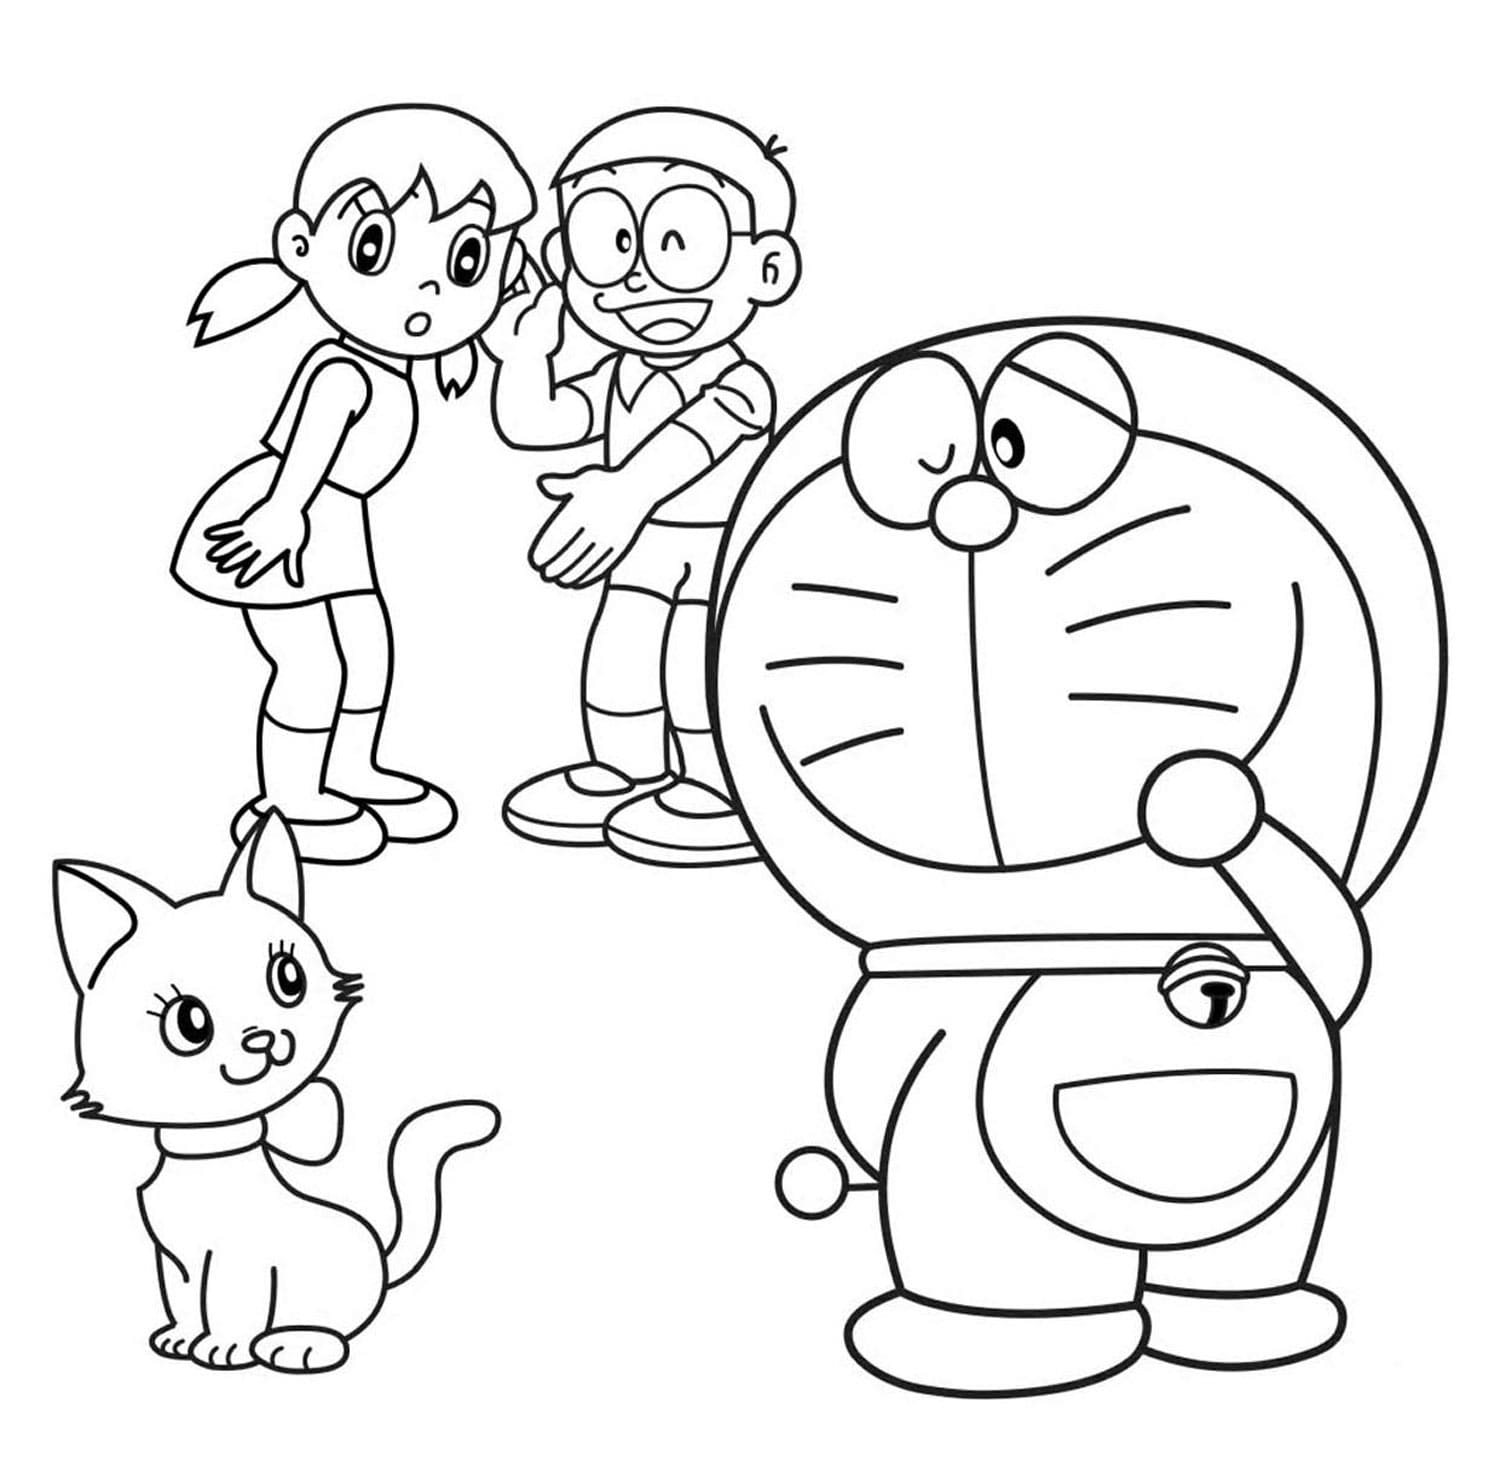 Doraemon-Ausmalbilder-ausmalbilderkinder.de-24